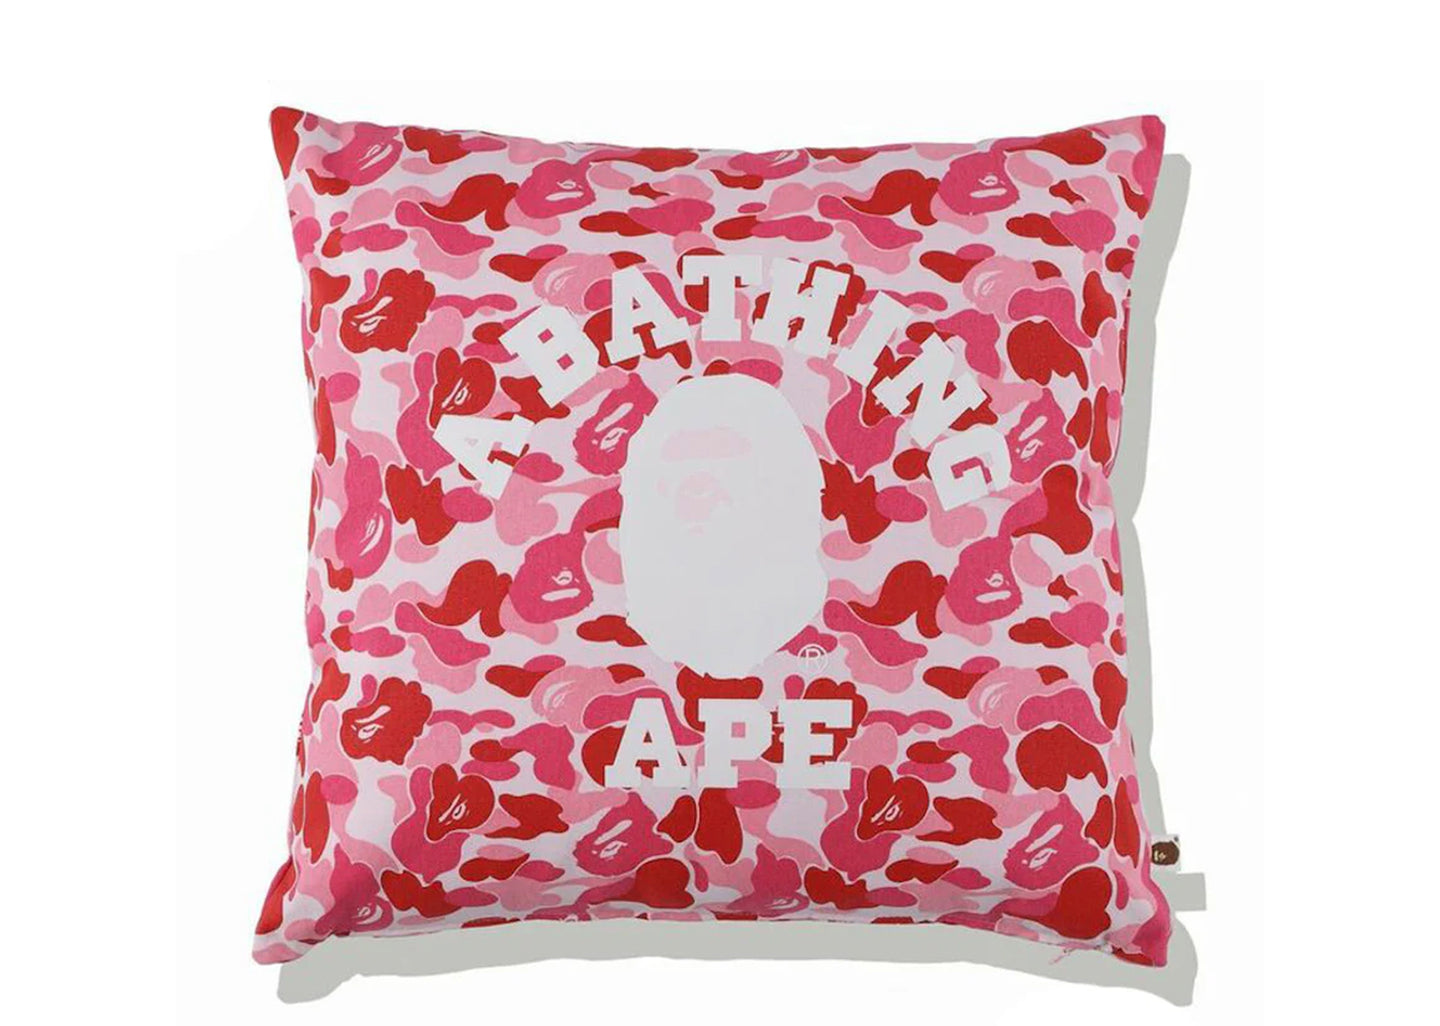 BAPE ABC Camo College Square Cushion (Pink)